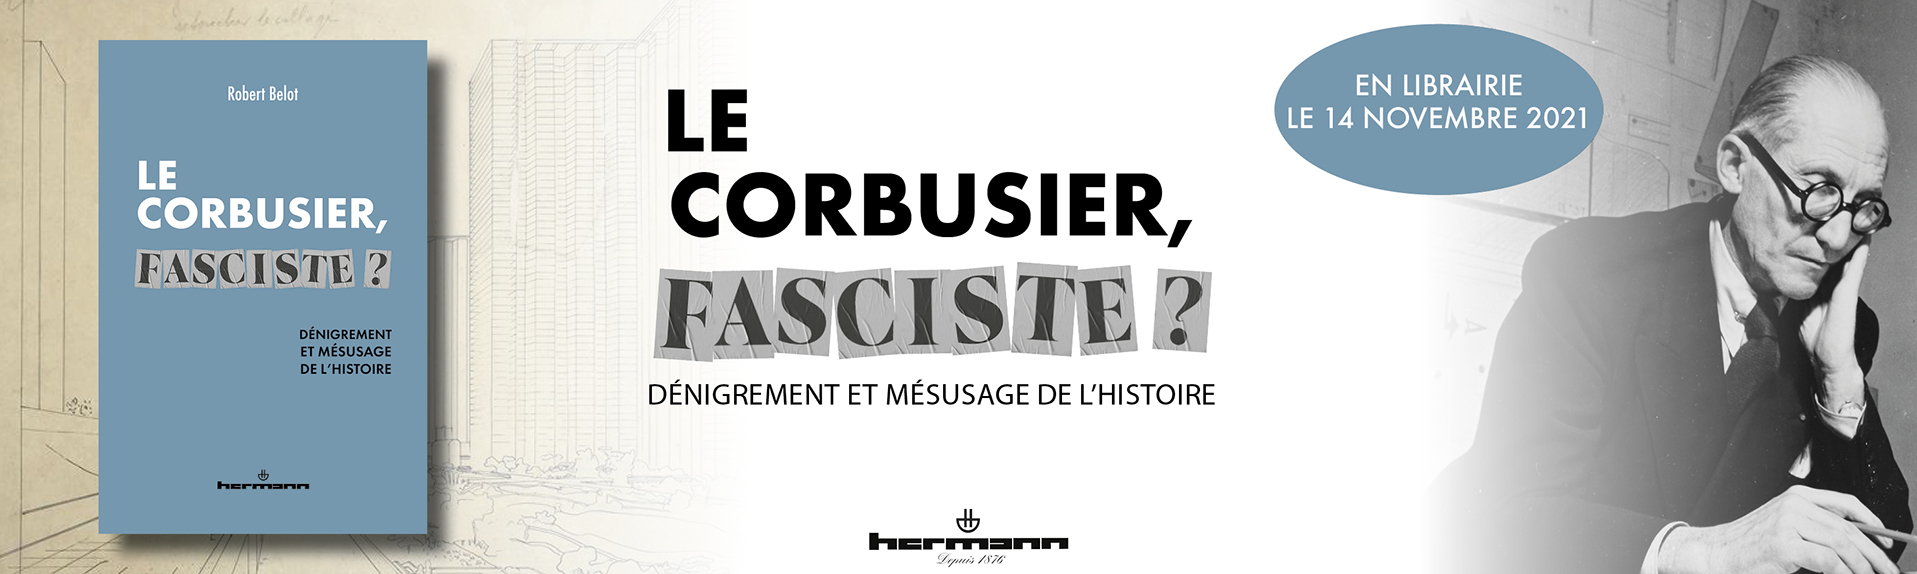 Le Corbusier fasciste ? 